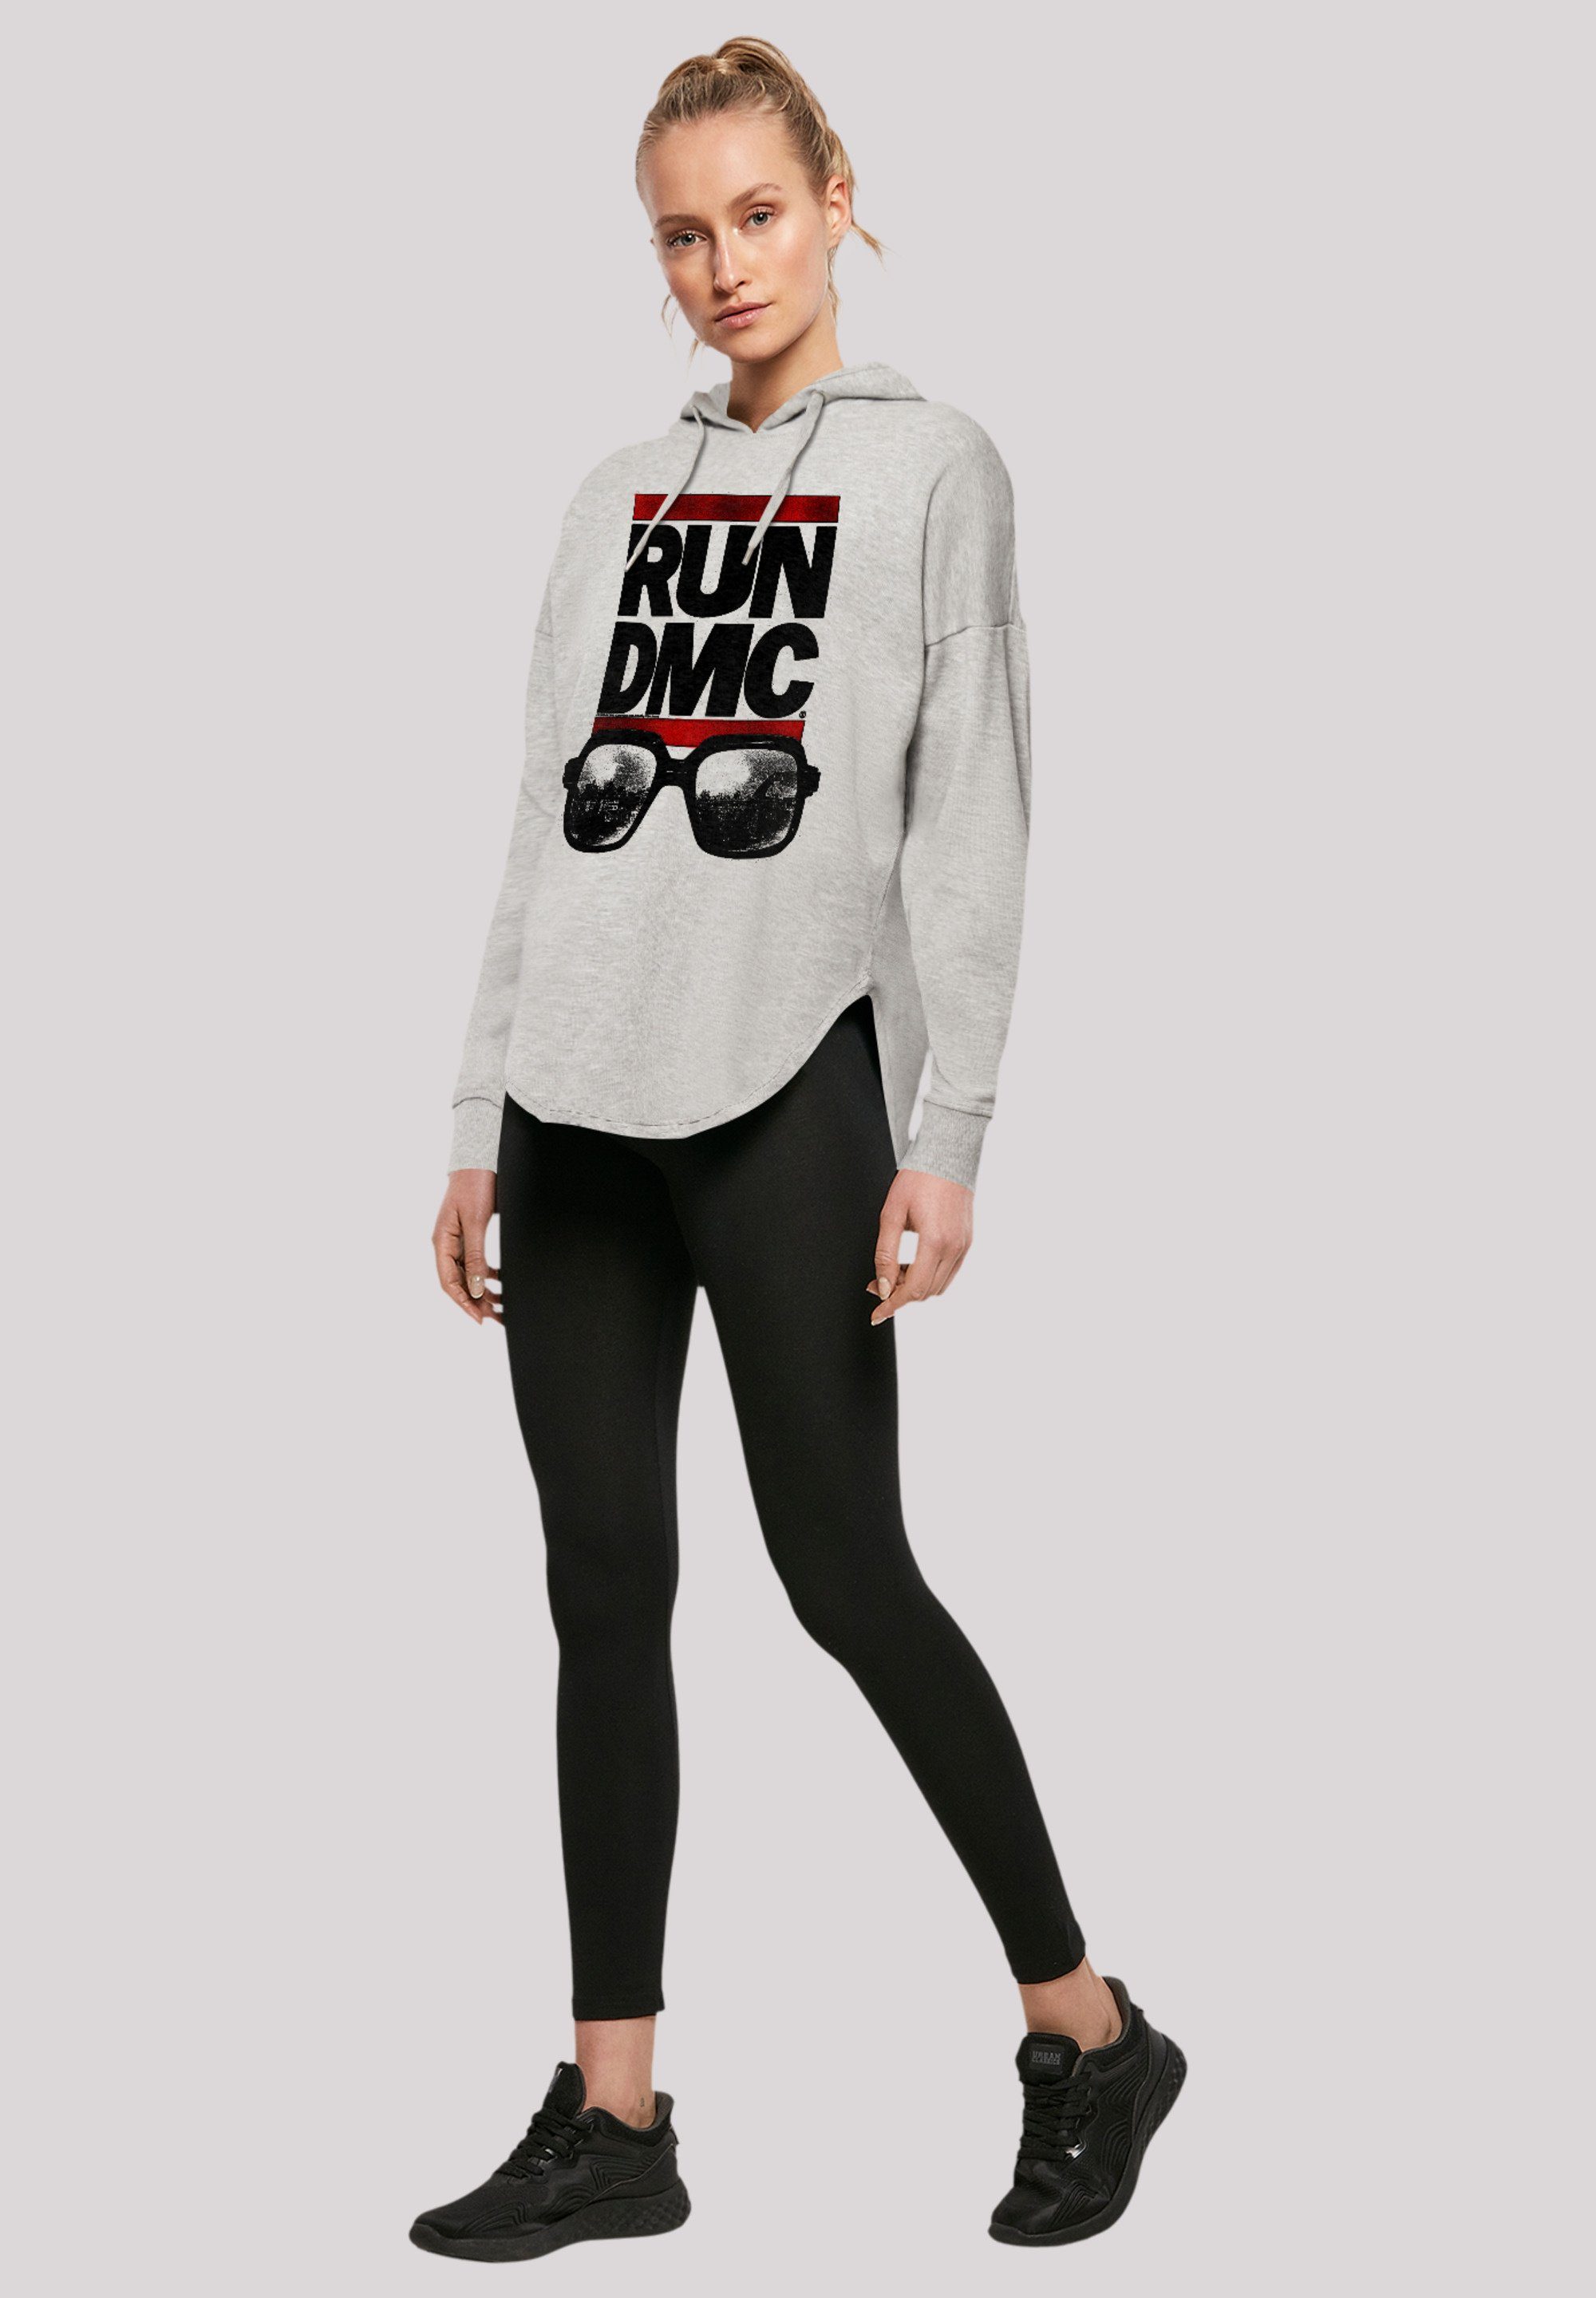 F4NT4STIC Sweatshirt Run DMC NYC Musik,Band,Logo Hip-Hop Band Music grey